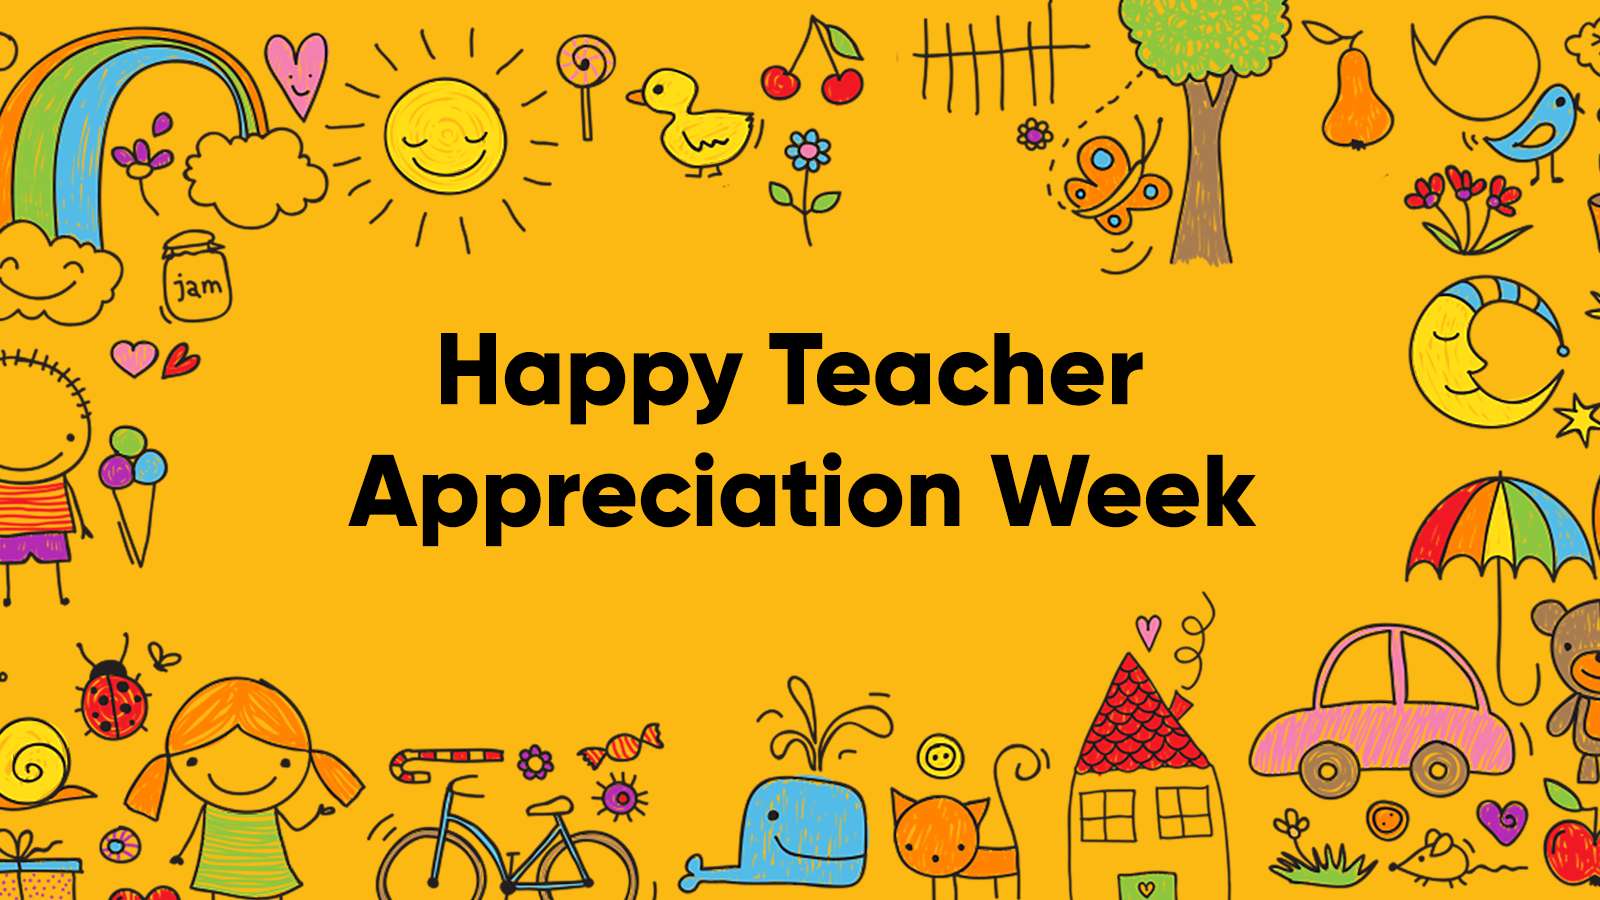 Happy Teacher Appreciation Week 2021. Virtual Ideas During COVID